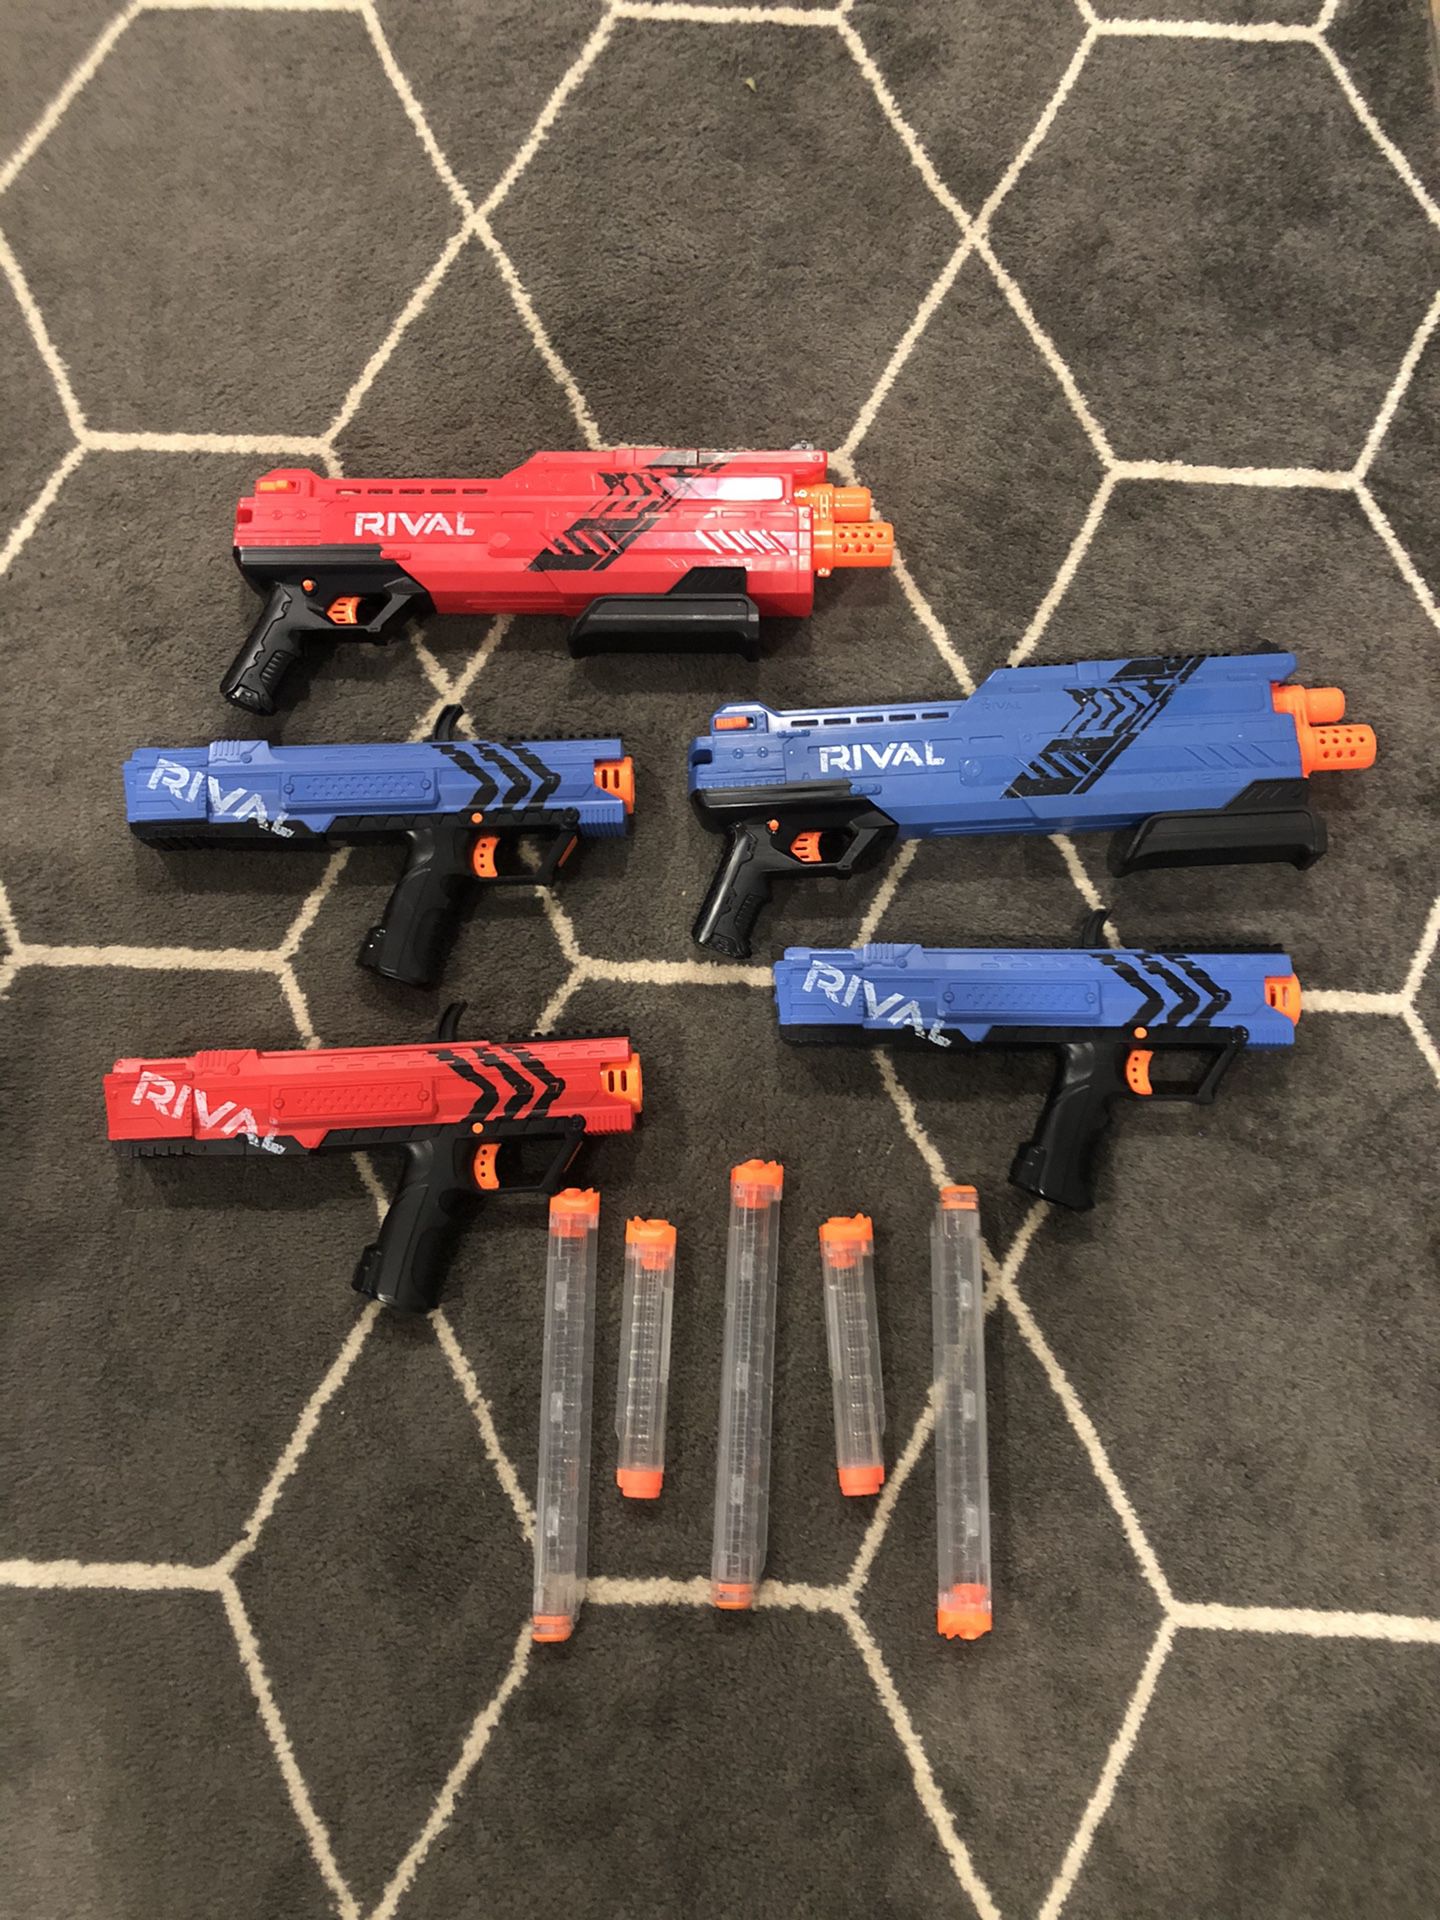 Nerf rival guns